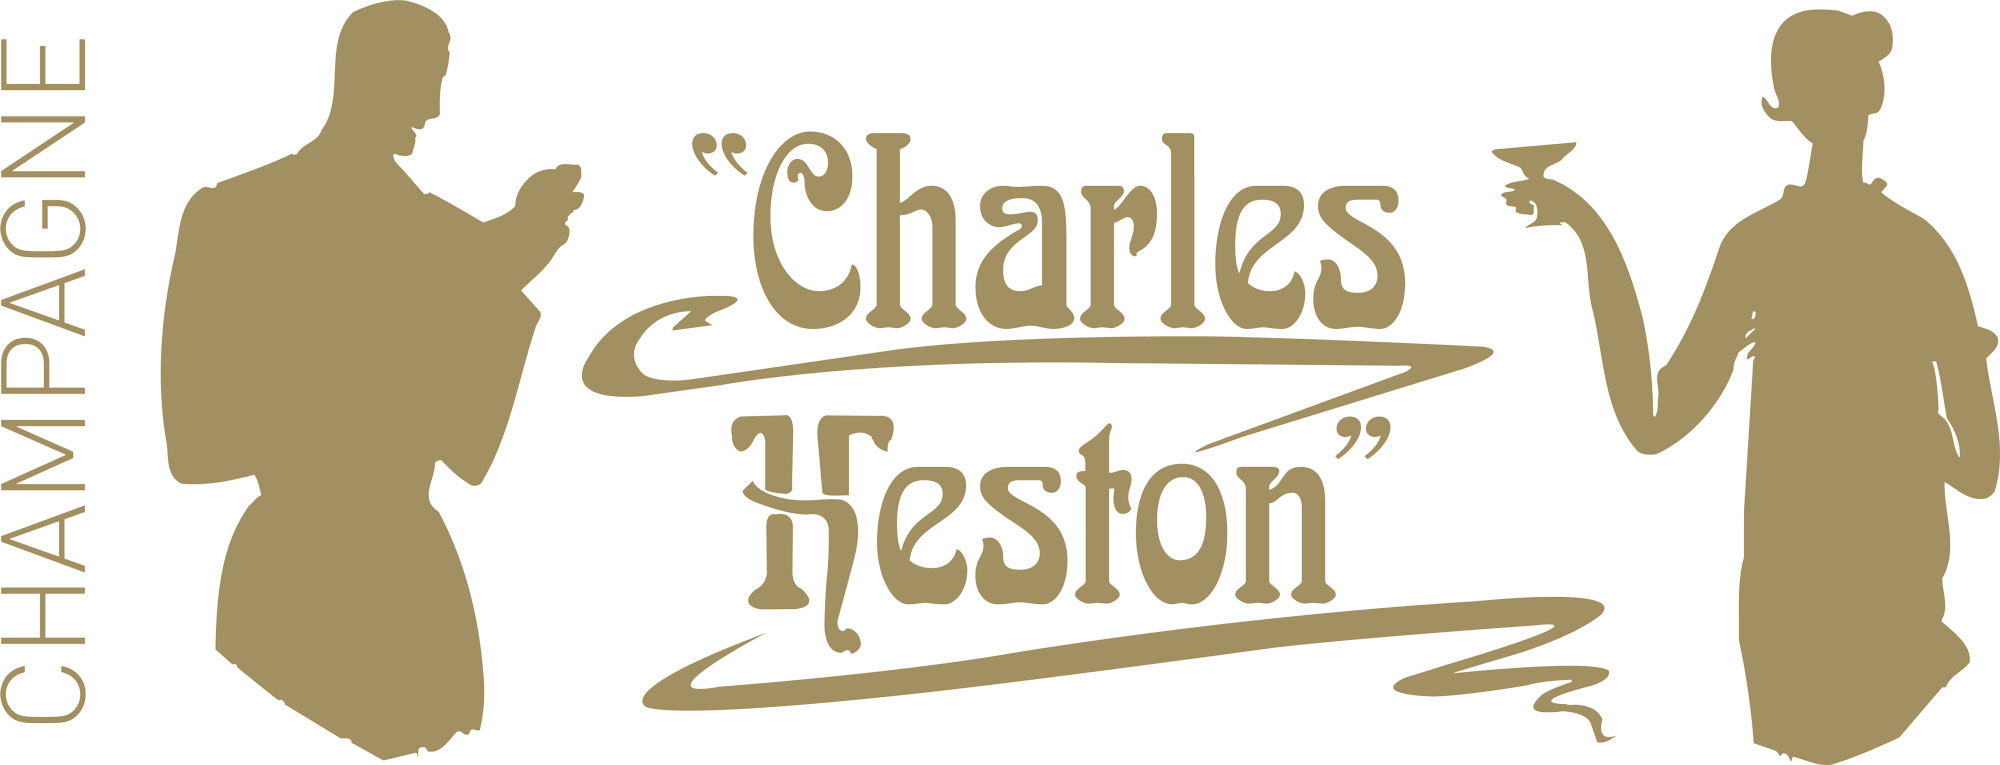 Champagne Charles Heston